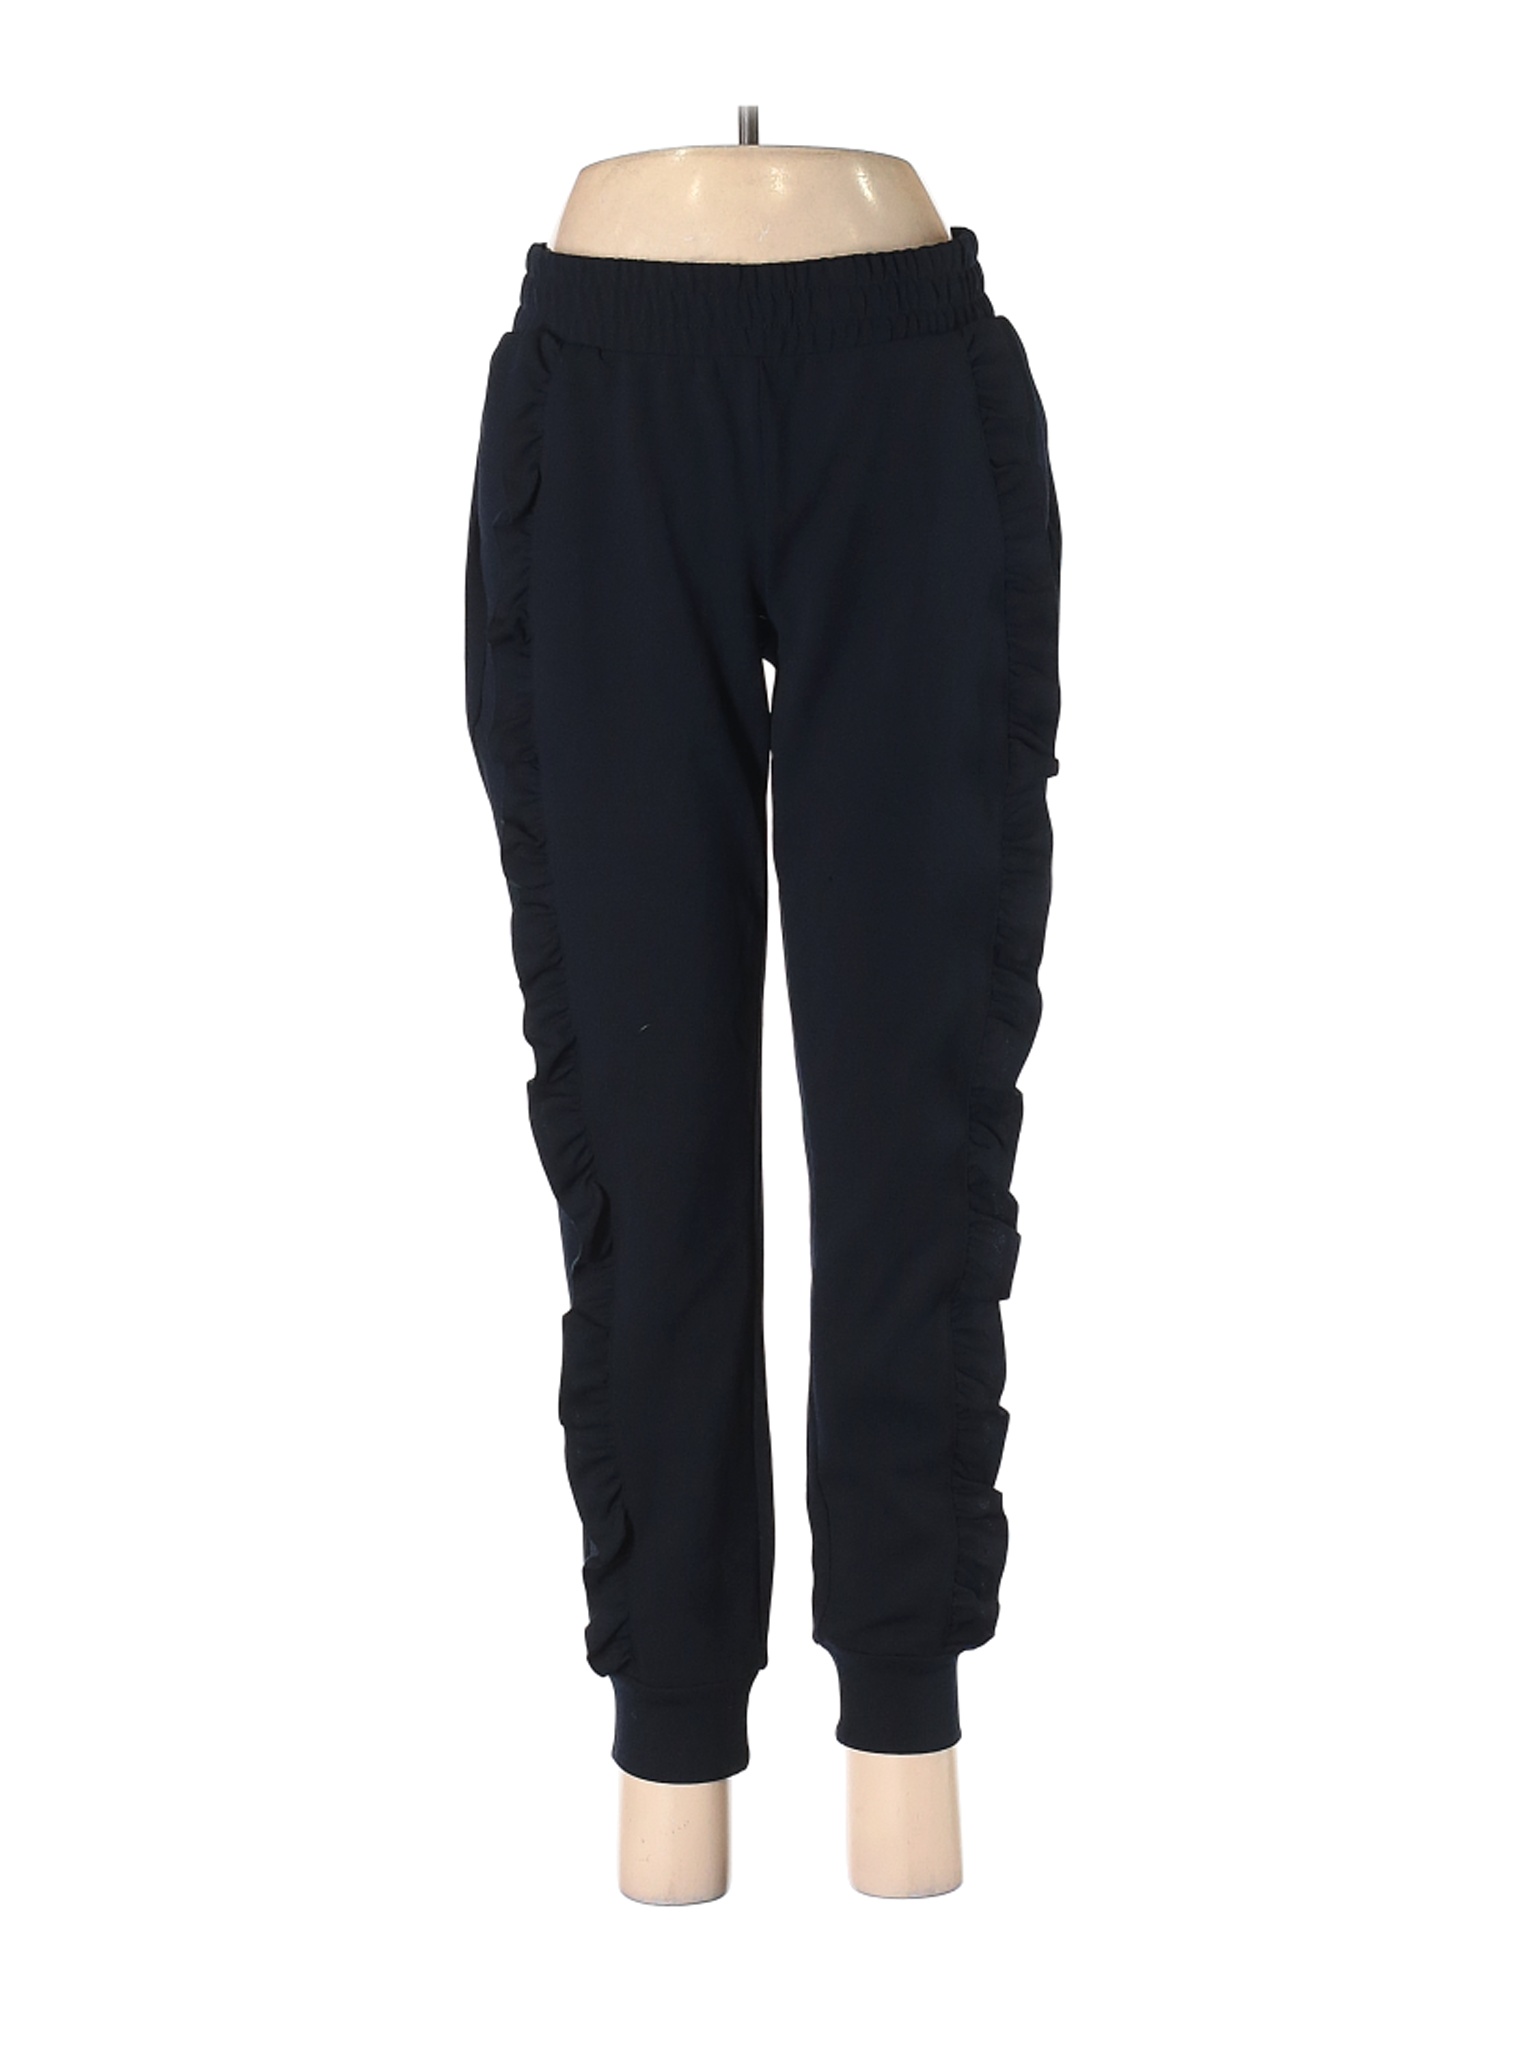 Boom Boom Jeans Women Black Casual Pants M | eBay